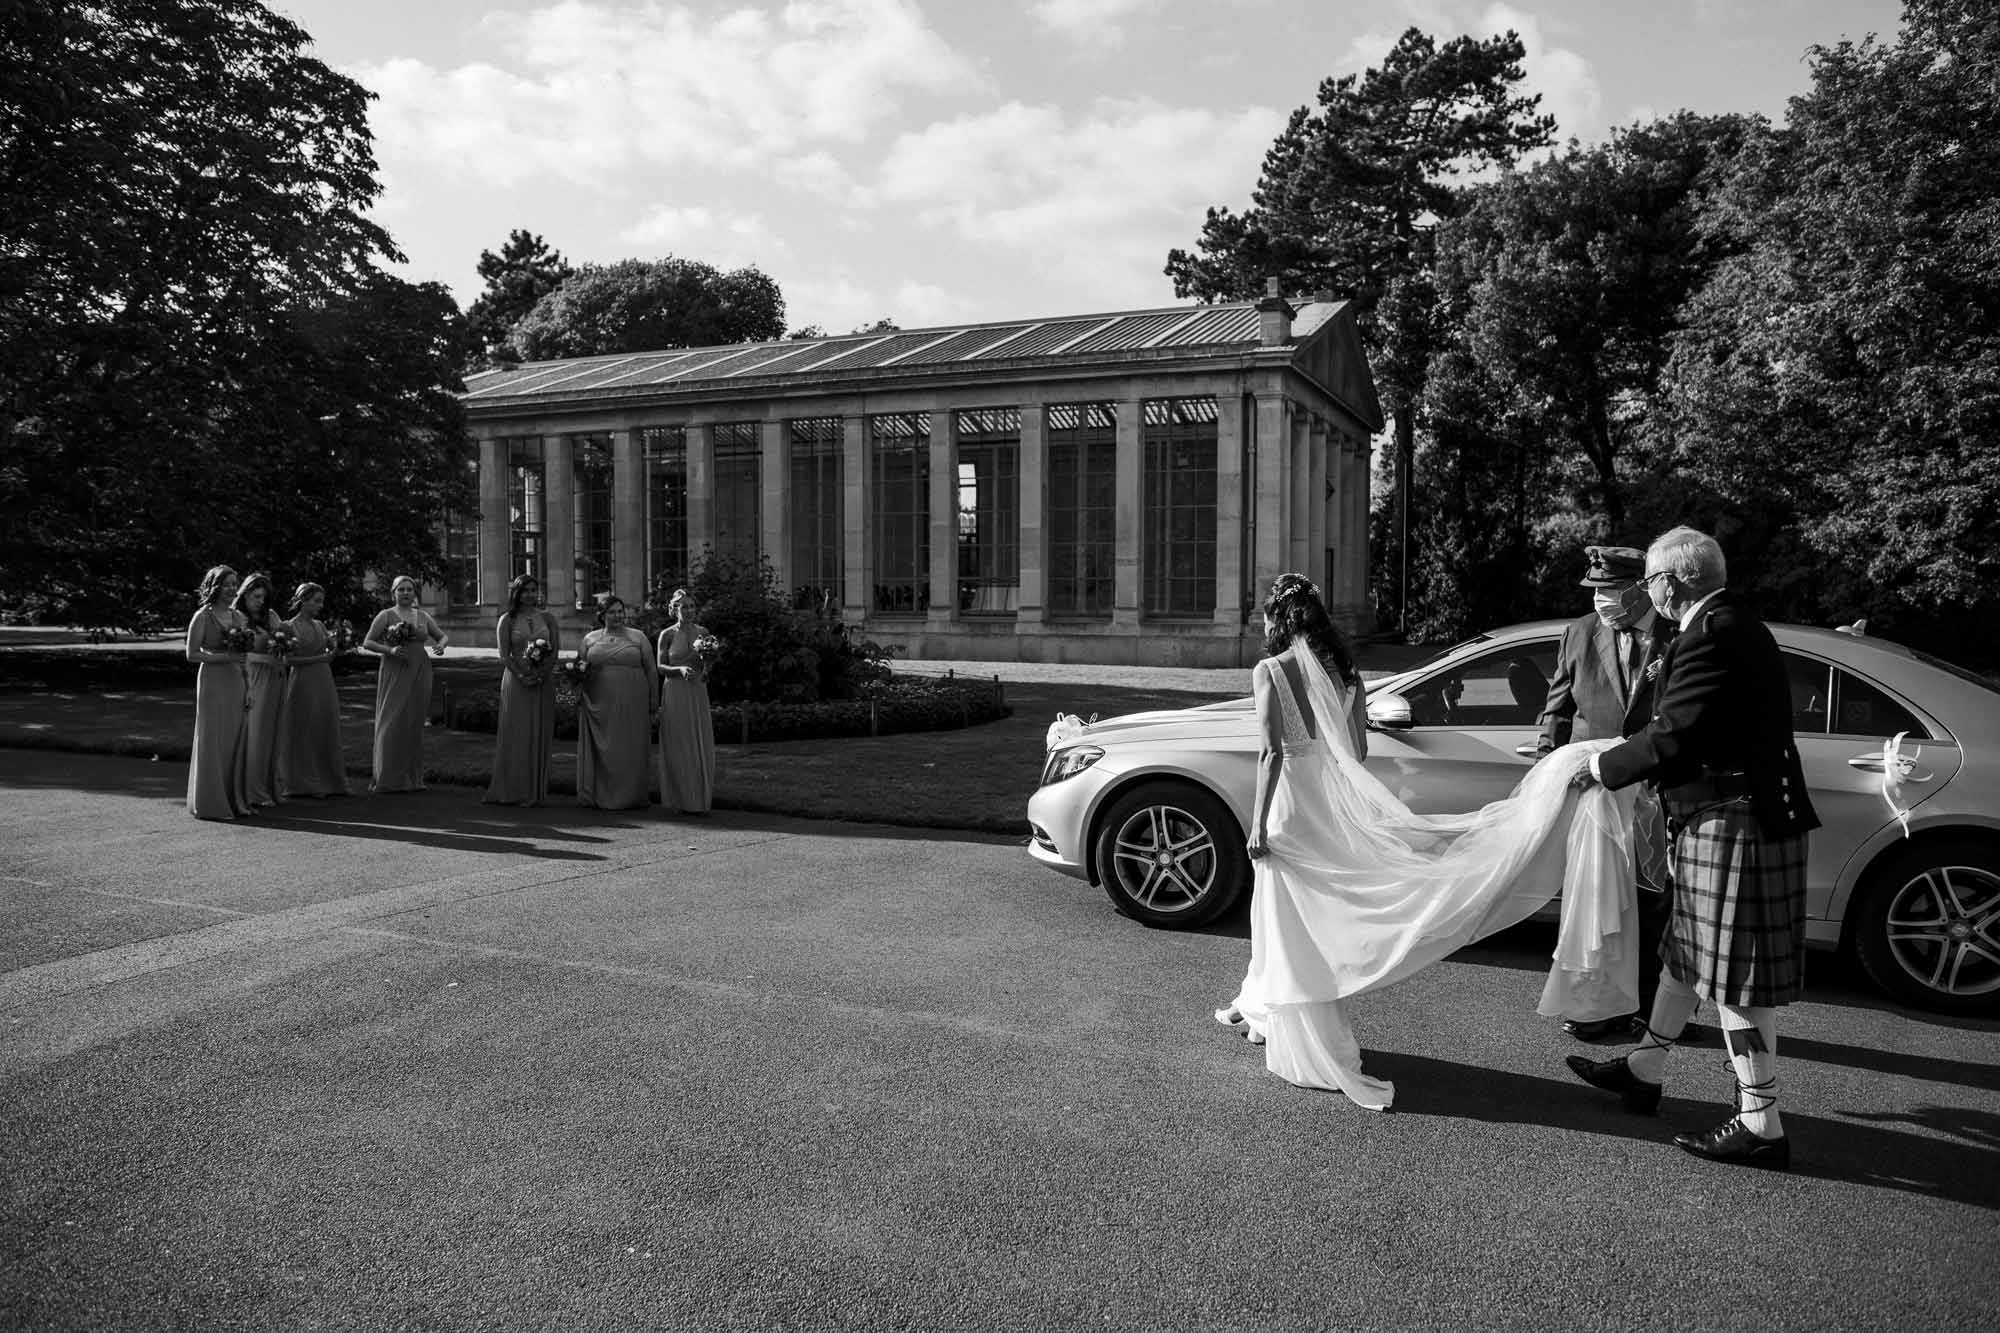 kew gardens conservatory wedding photograph